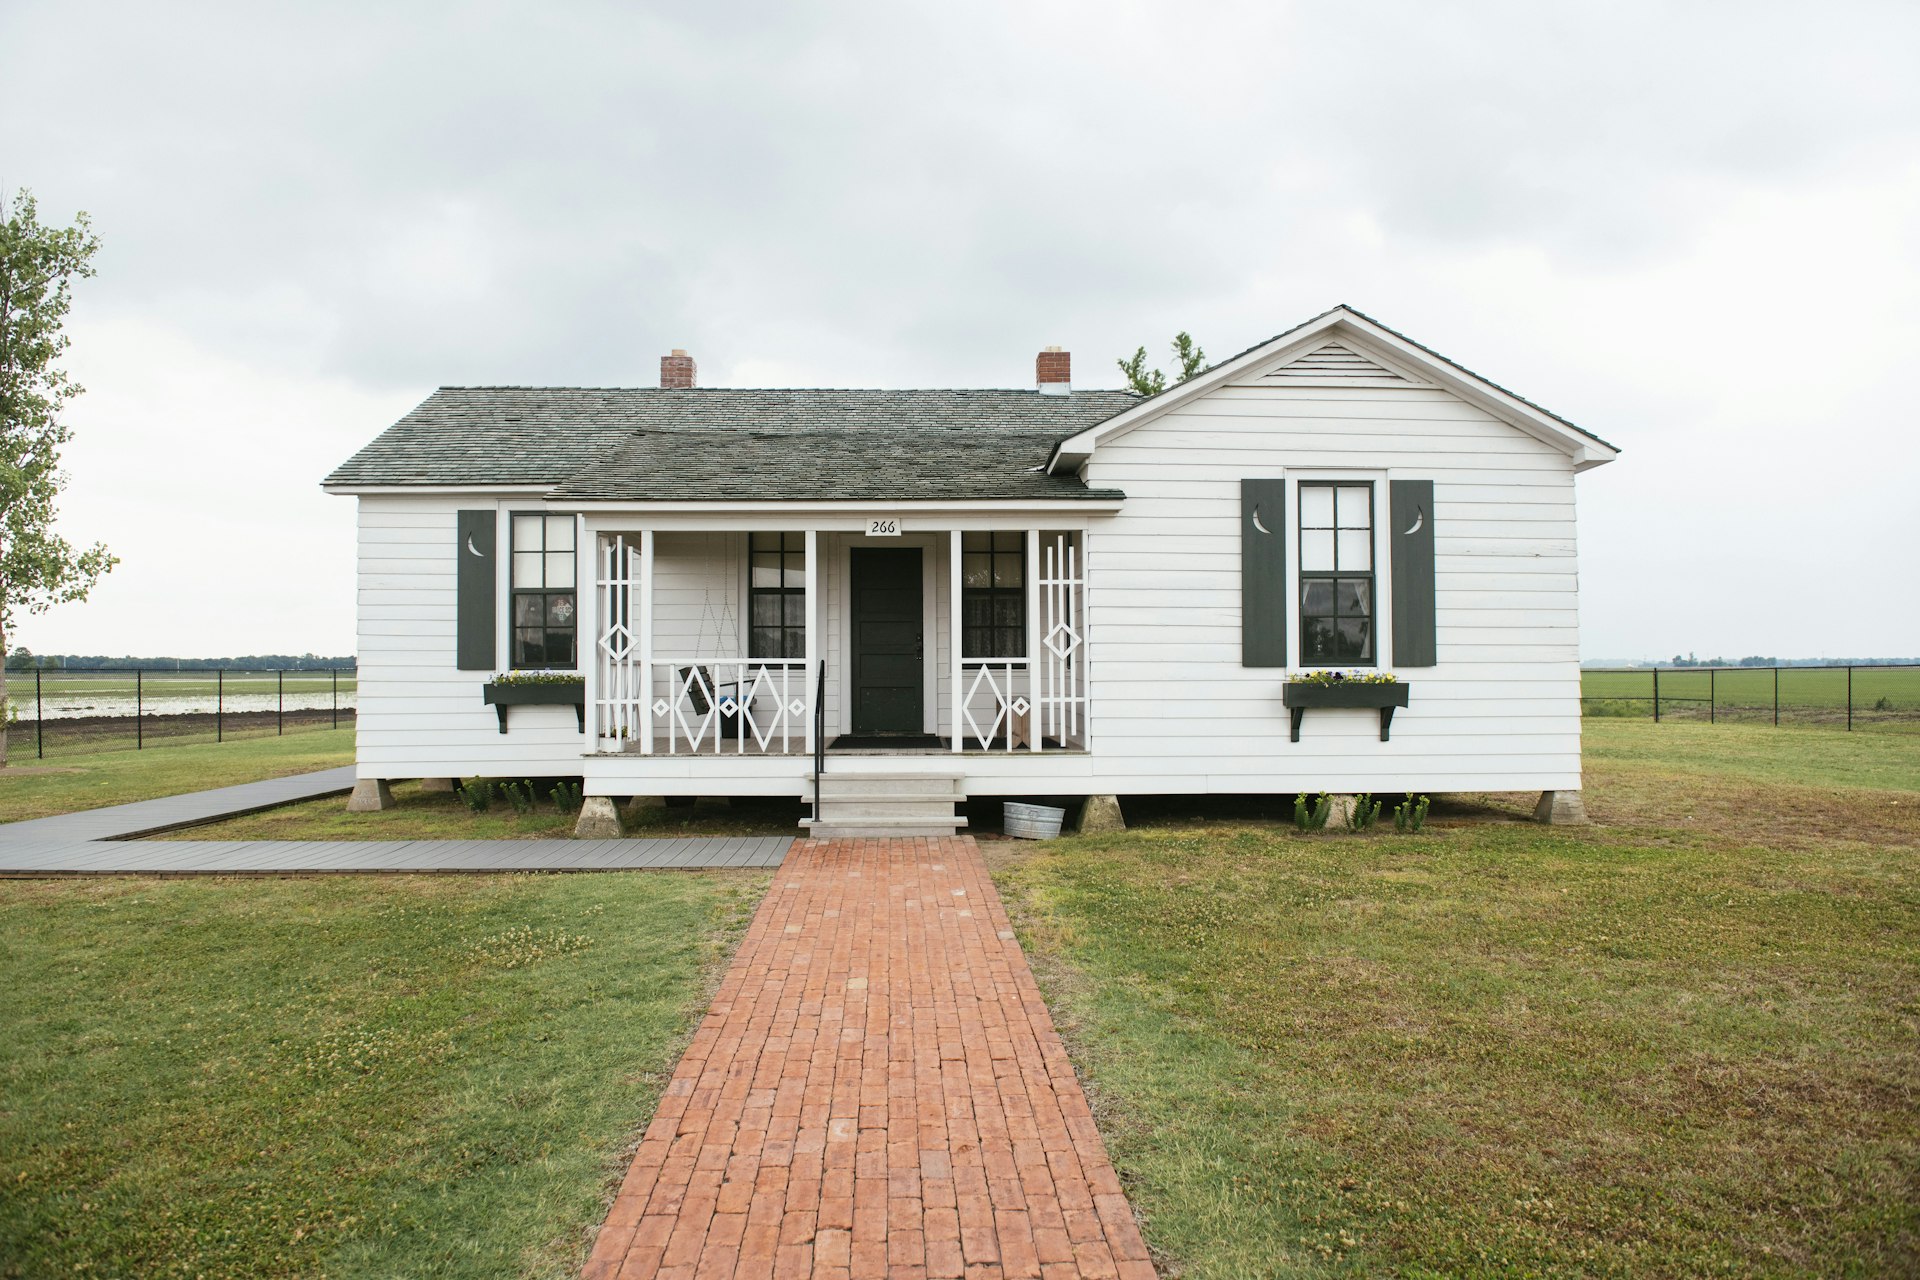 Johnny Cash's restored boyhood home